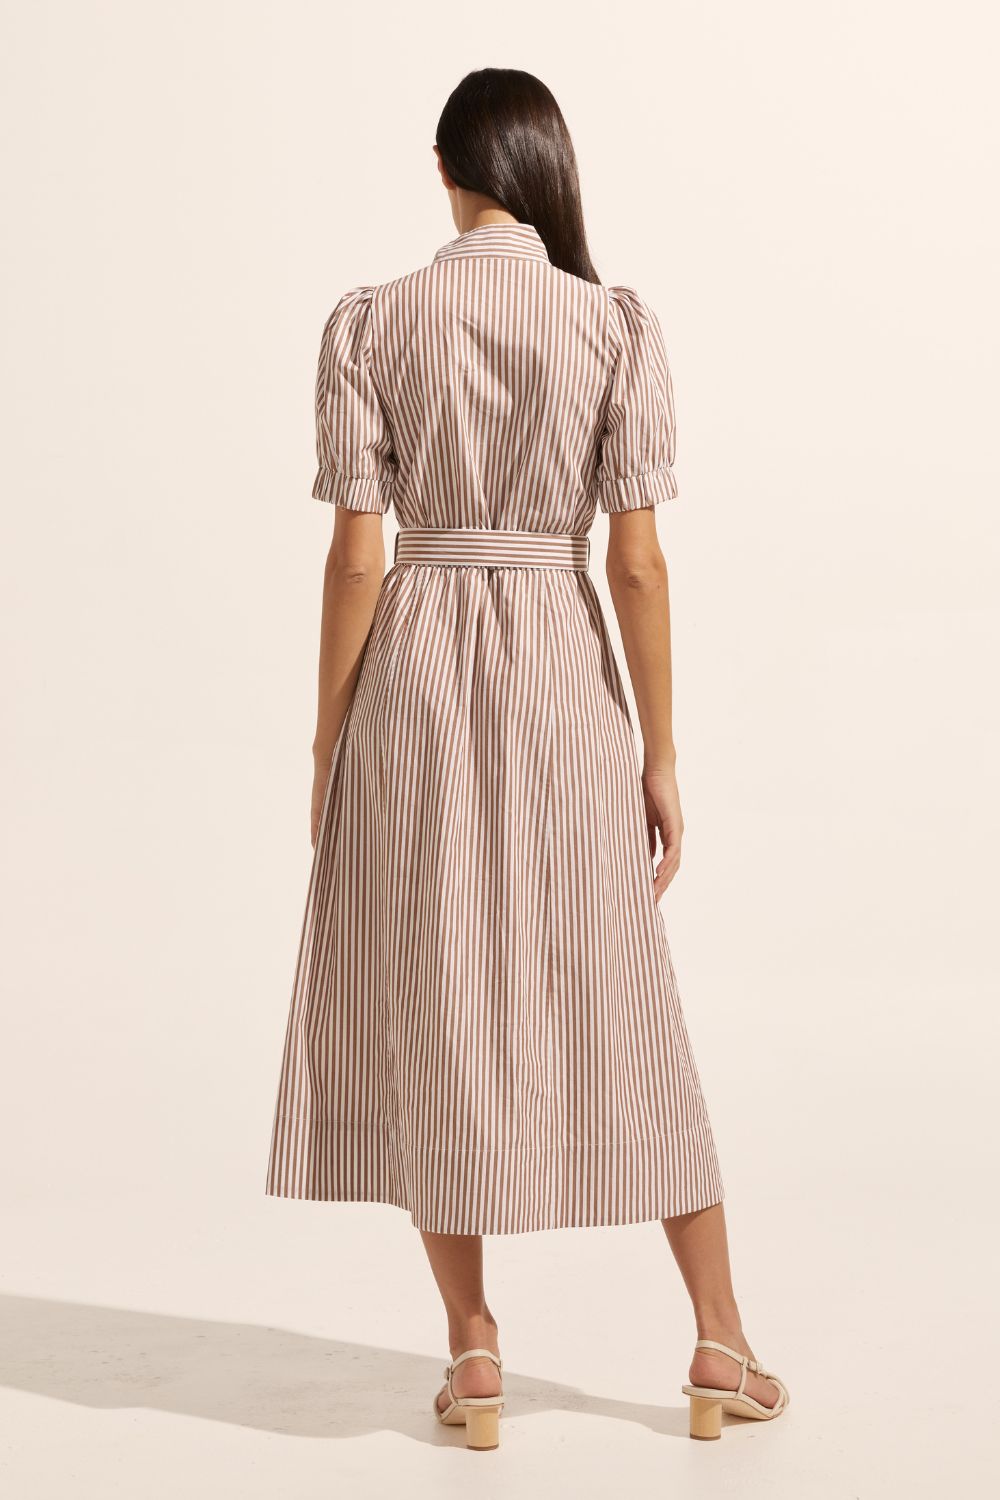 brown and white stripe, dress, high neck, mid length sleeve, fabric belt,  midi dress, side pockets, back image